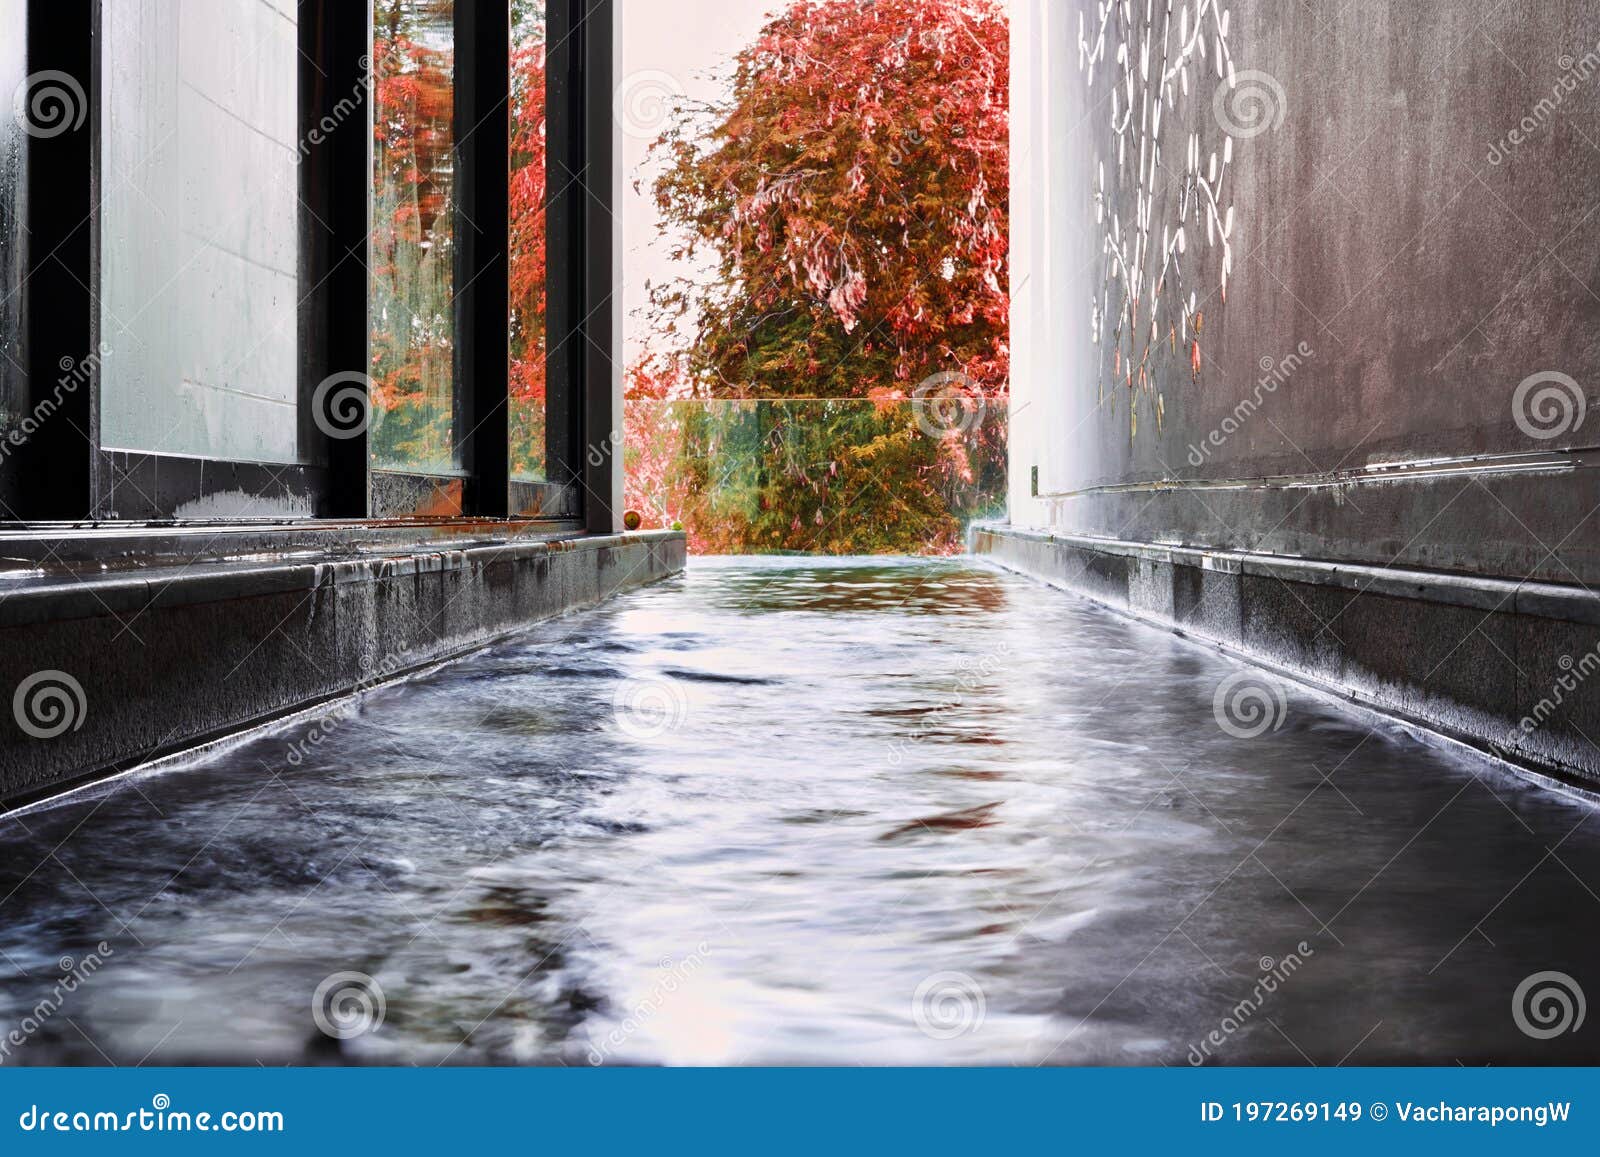 Autumn falls pool